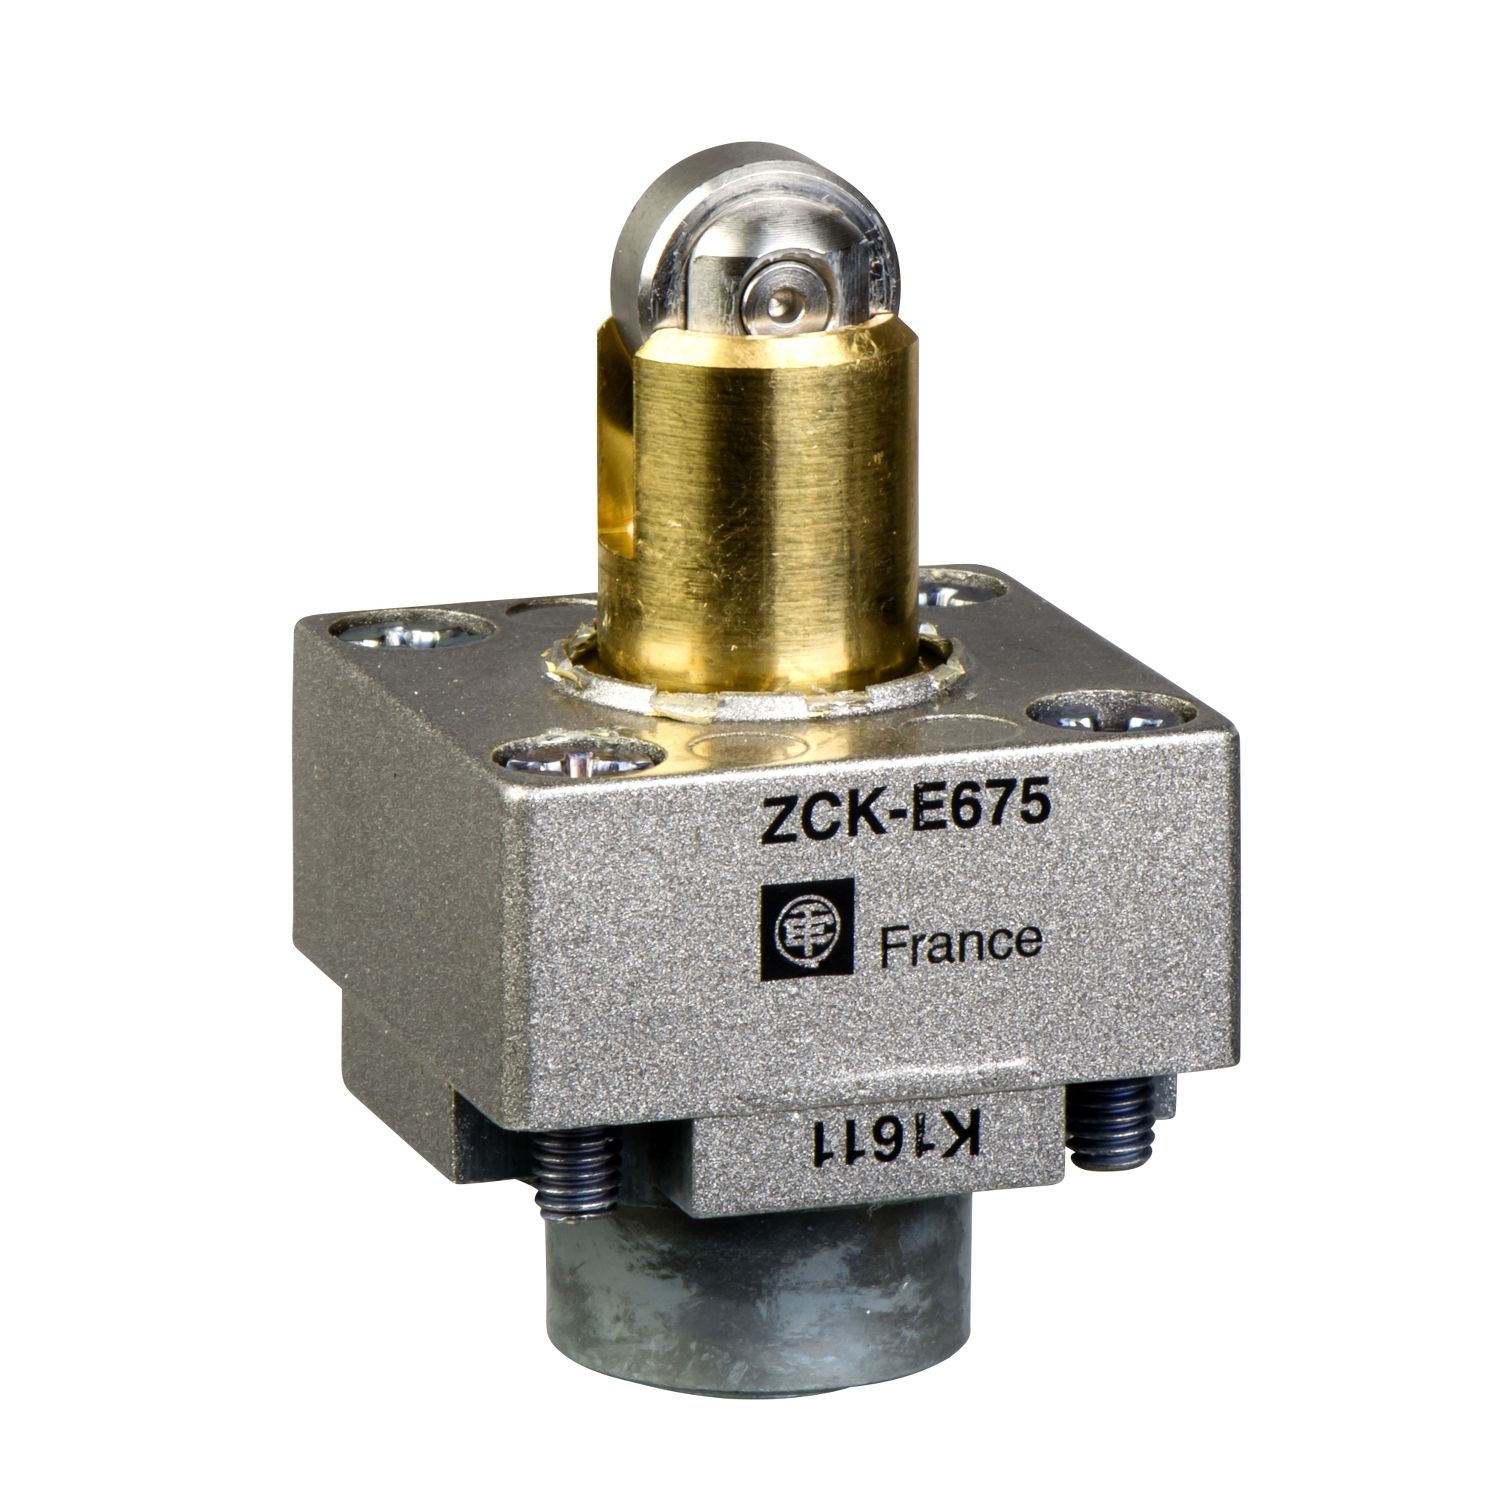 ZCKE67 Limit switch head, Limit switches XC Standard, ZCKE, steel roller plunger reinforced